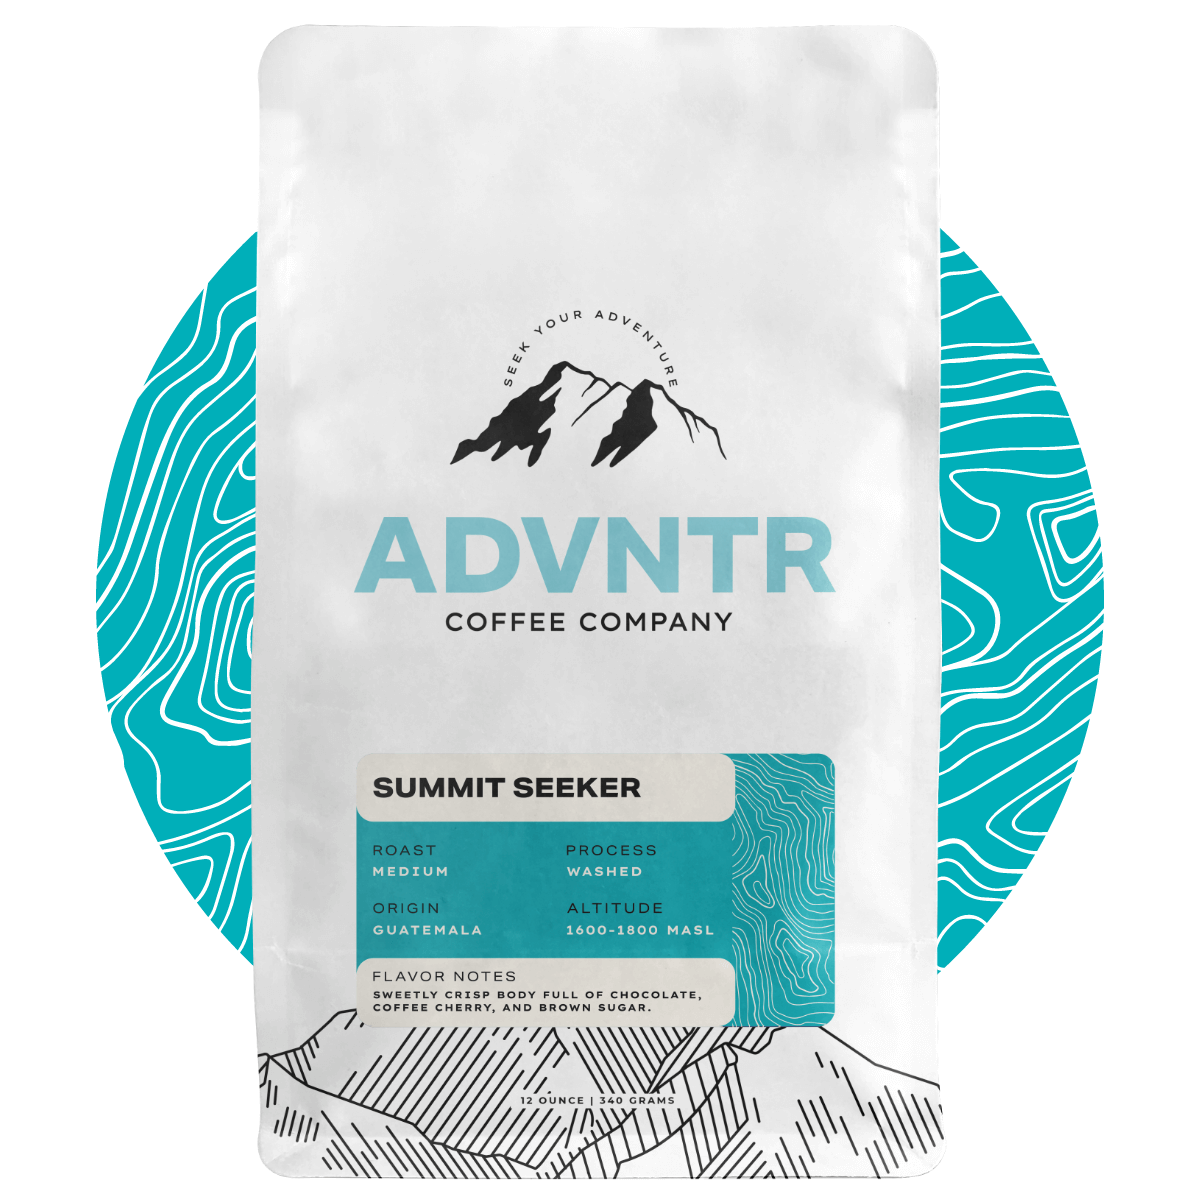 Summit Seeker 12 ounce coffee bag by ADVNTR Coffee Co.